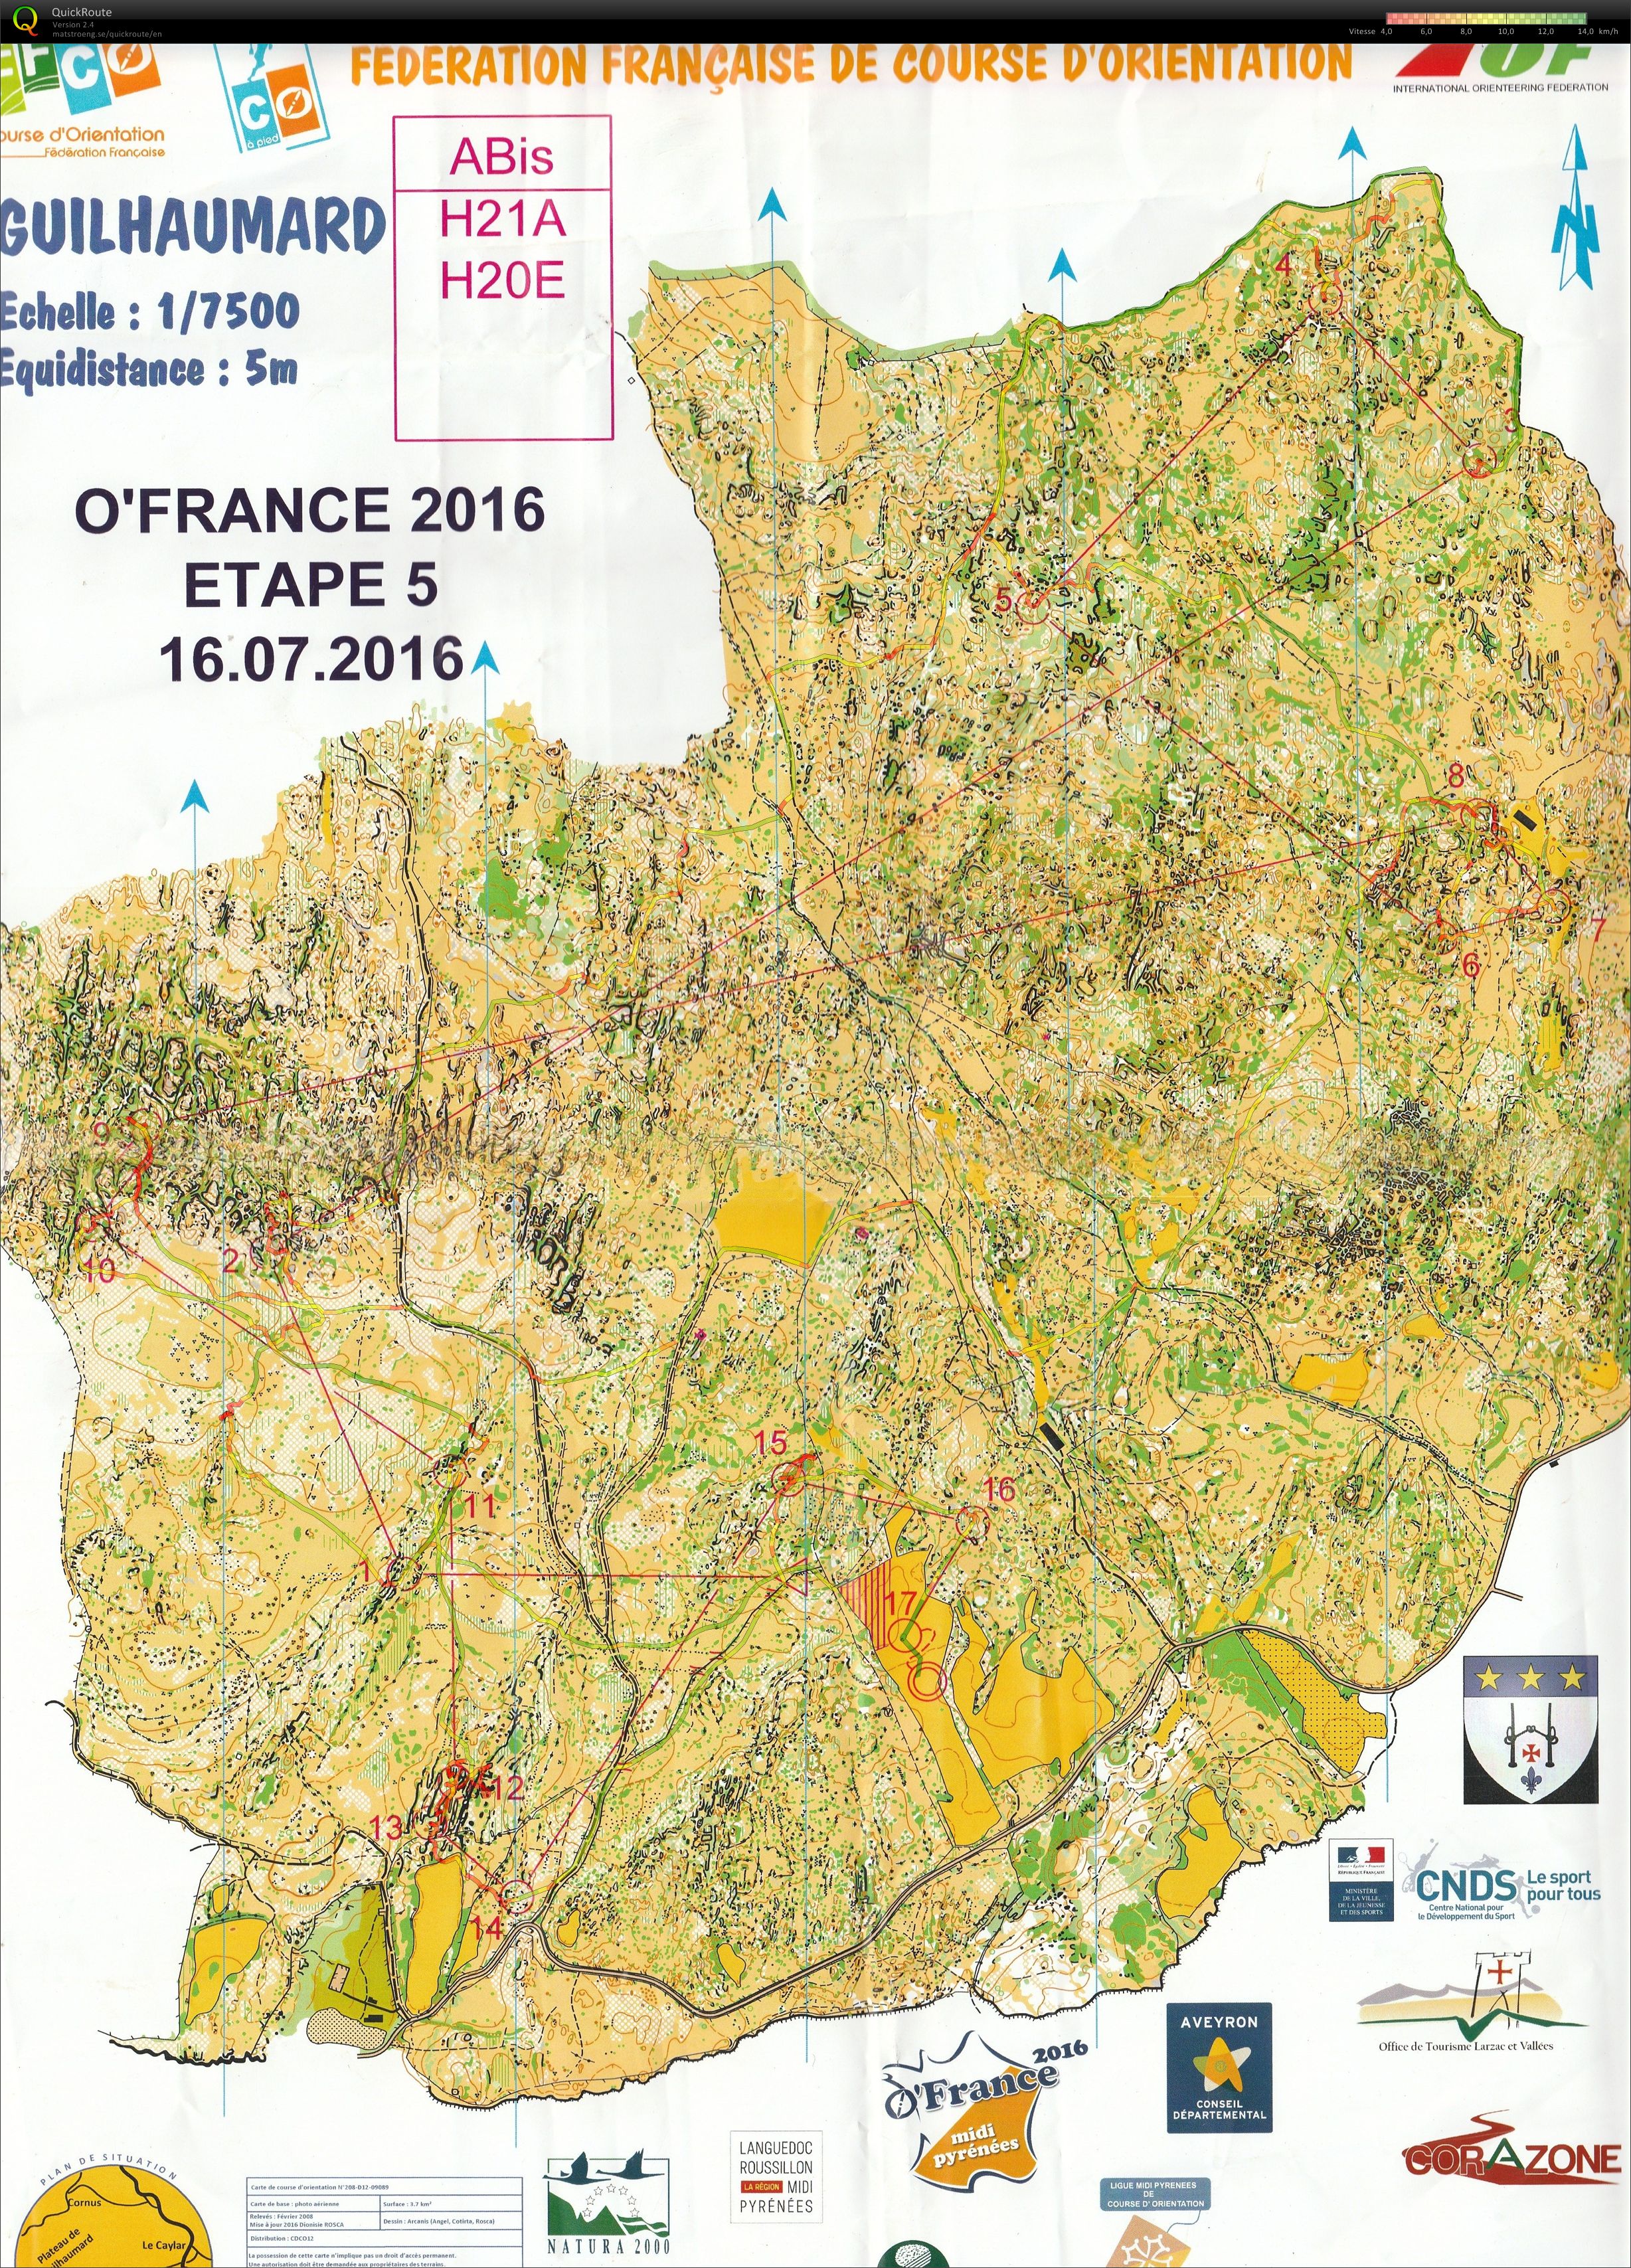 O'France Etape 5 (16-07-2016)